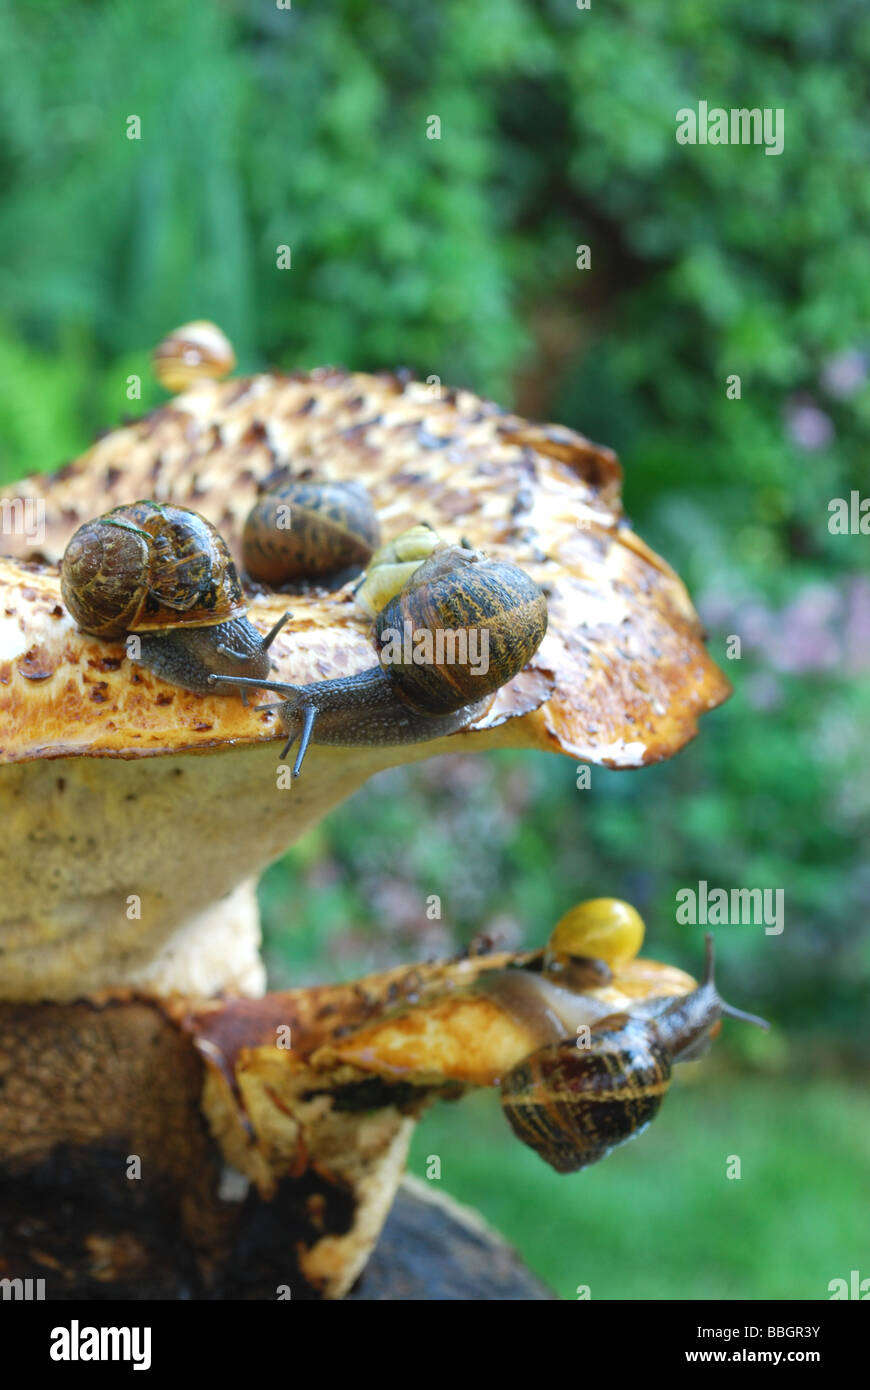 Snails on the fungi Stock Photo